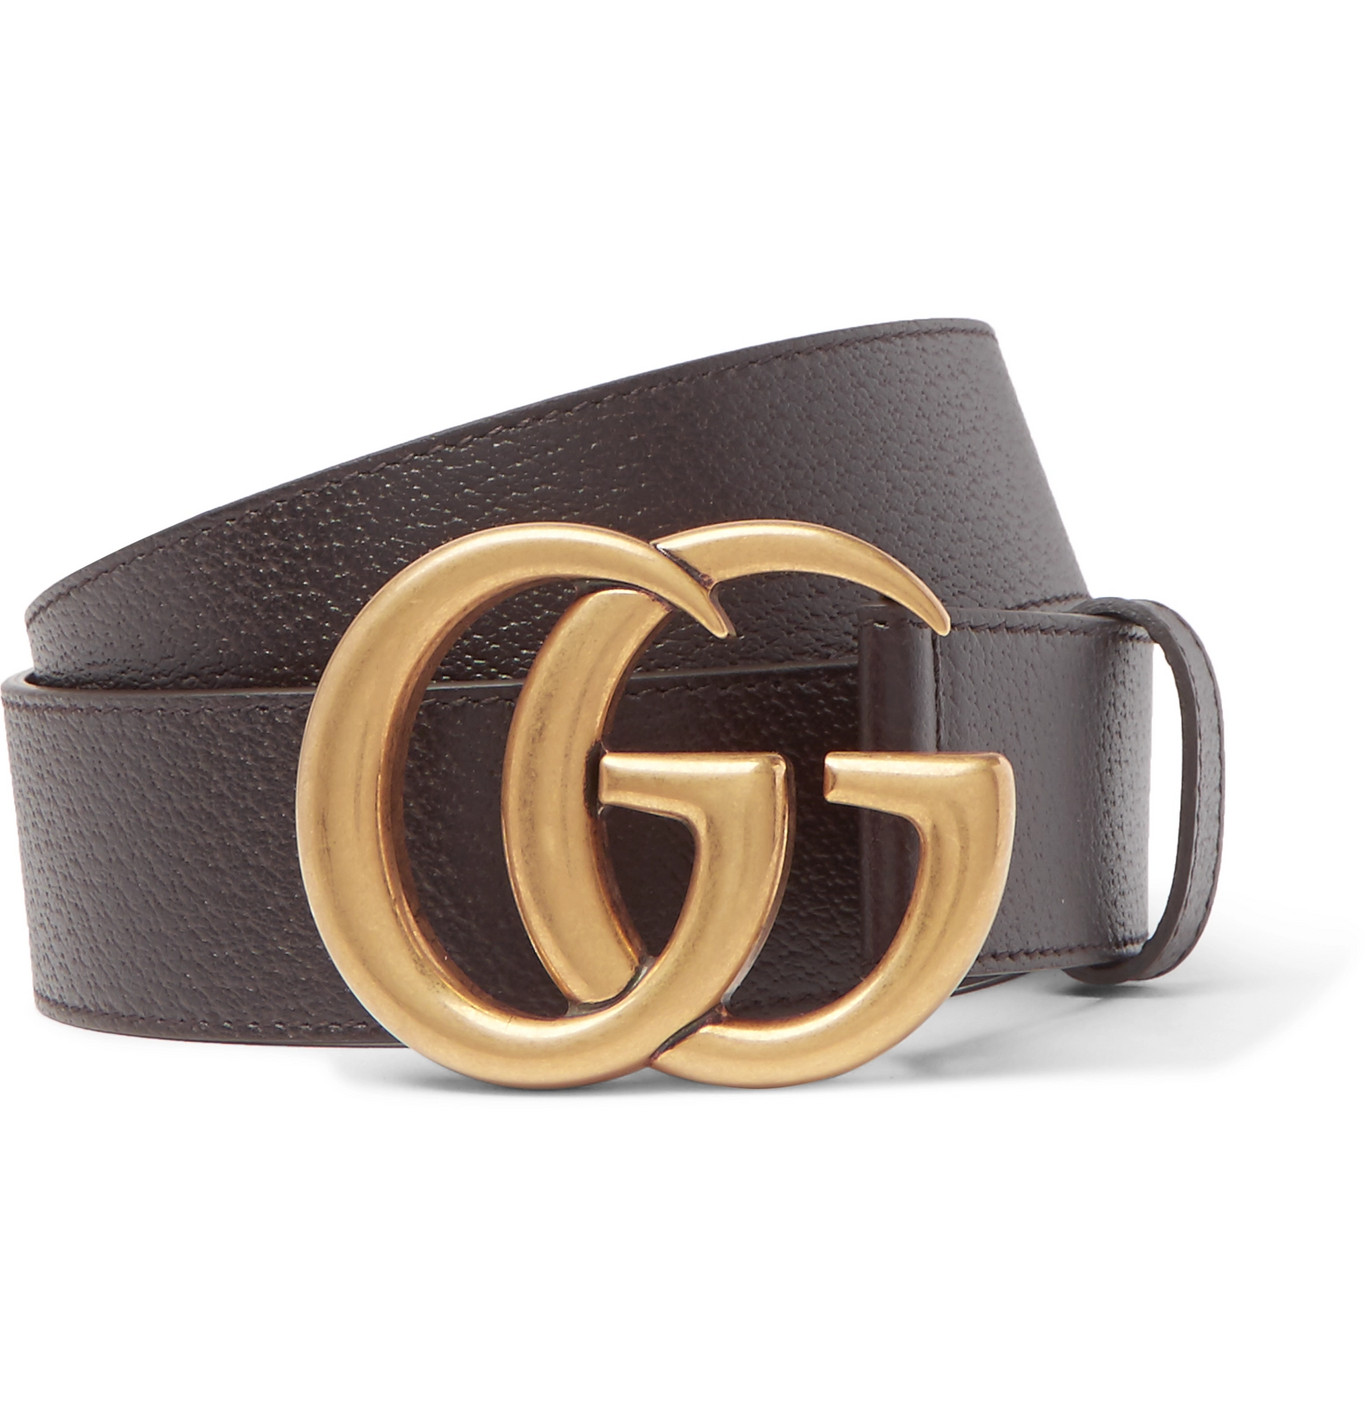 Gucci - 4cm Dark-Brown Full-Grain Leather Belt - Men - Brown | The ...